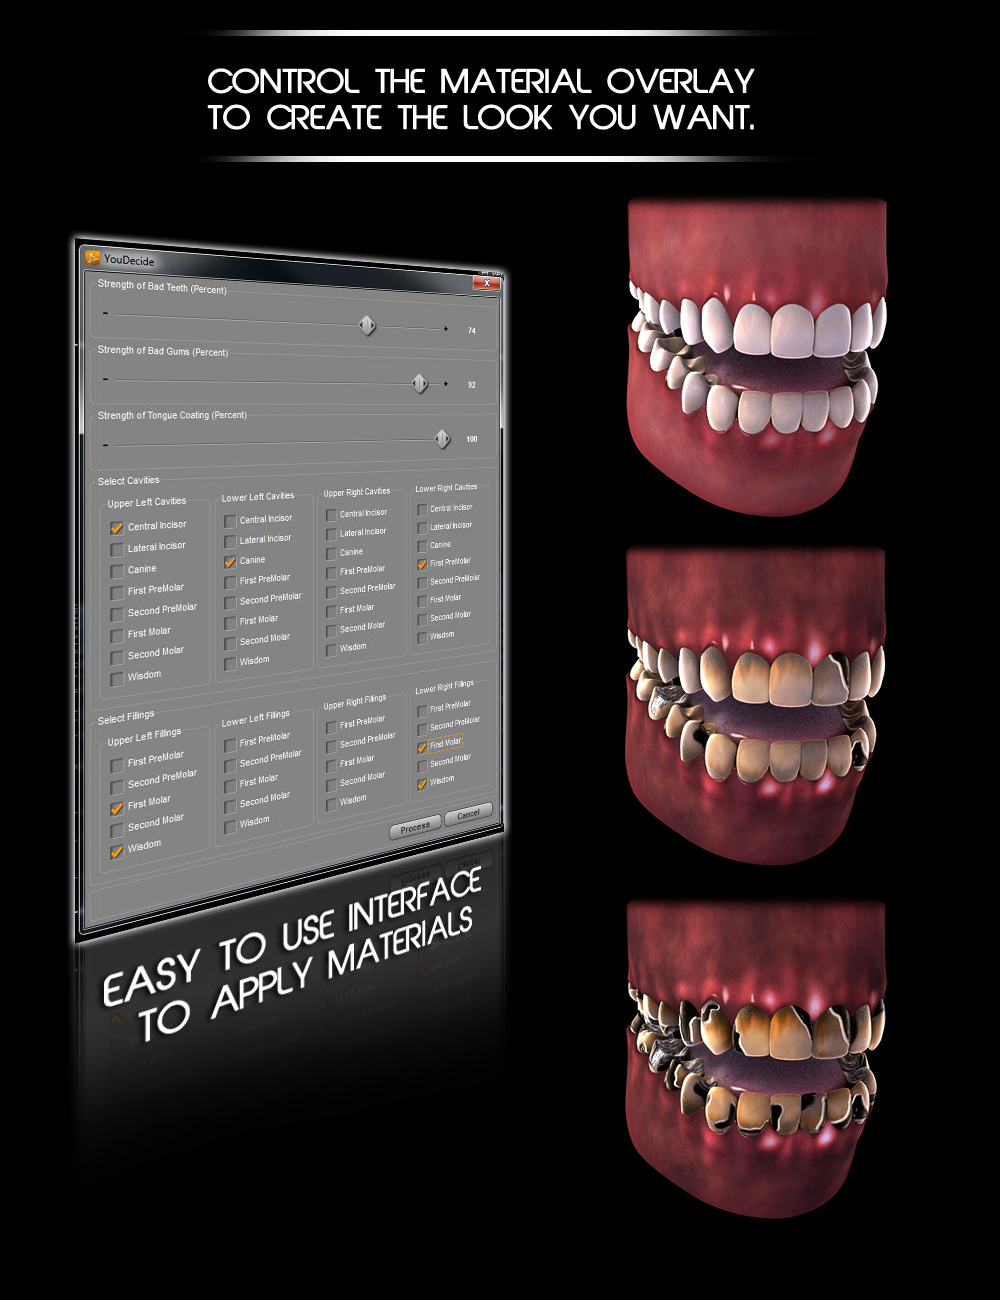 Dental Plan for Genesis by: DraagonStormZev0, 3D Models by Daz 3D